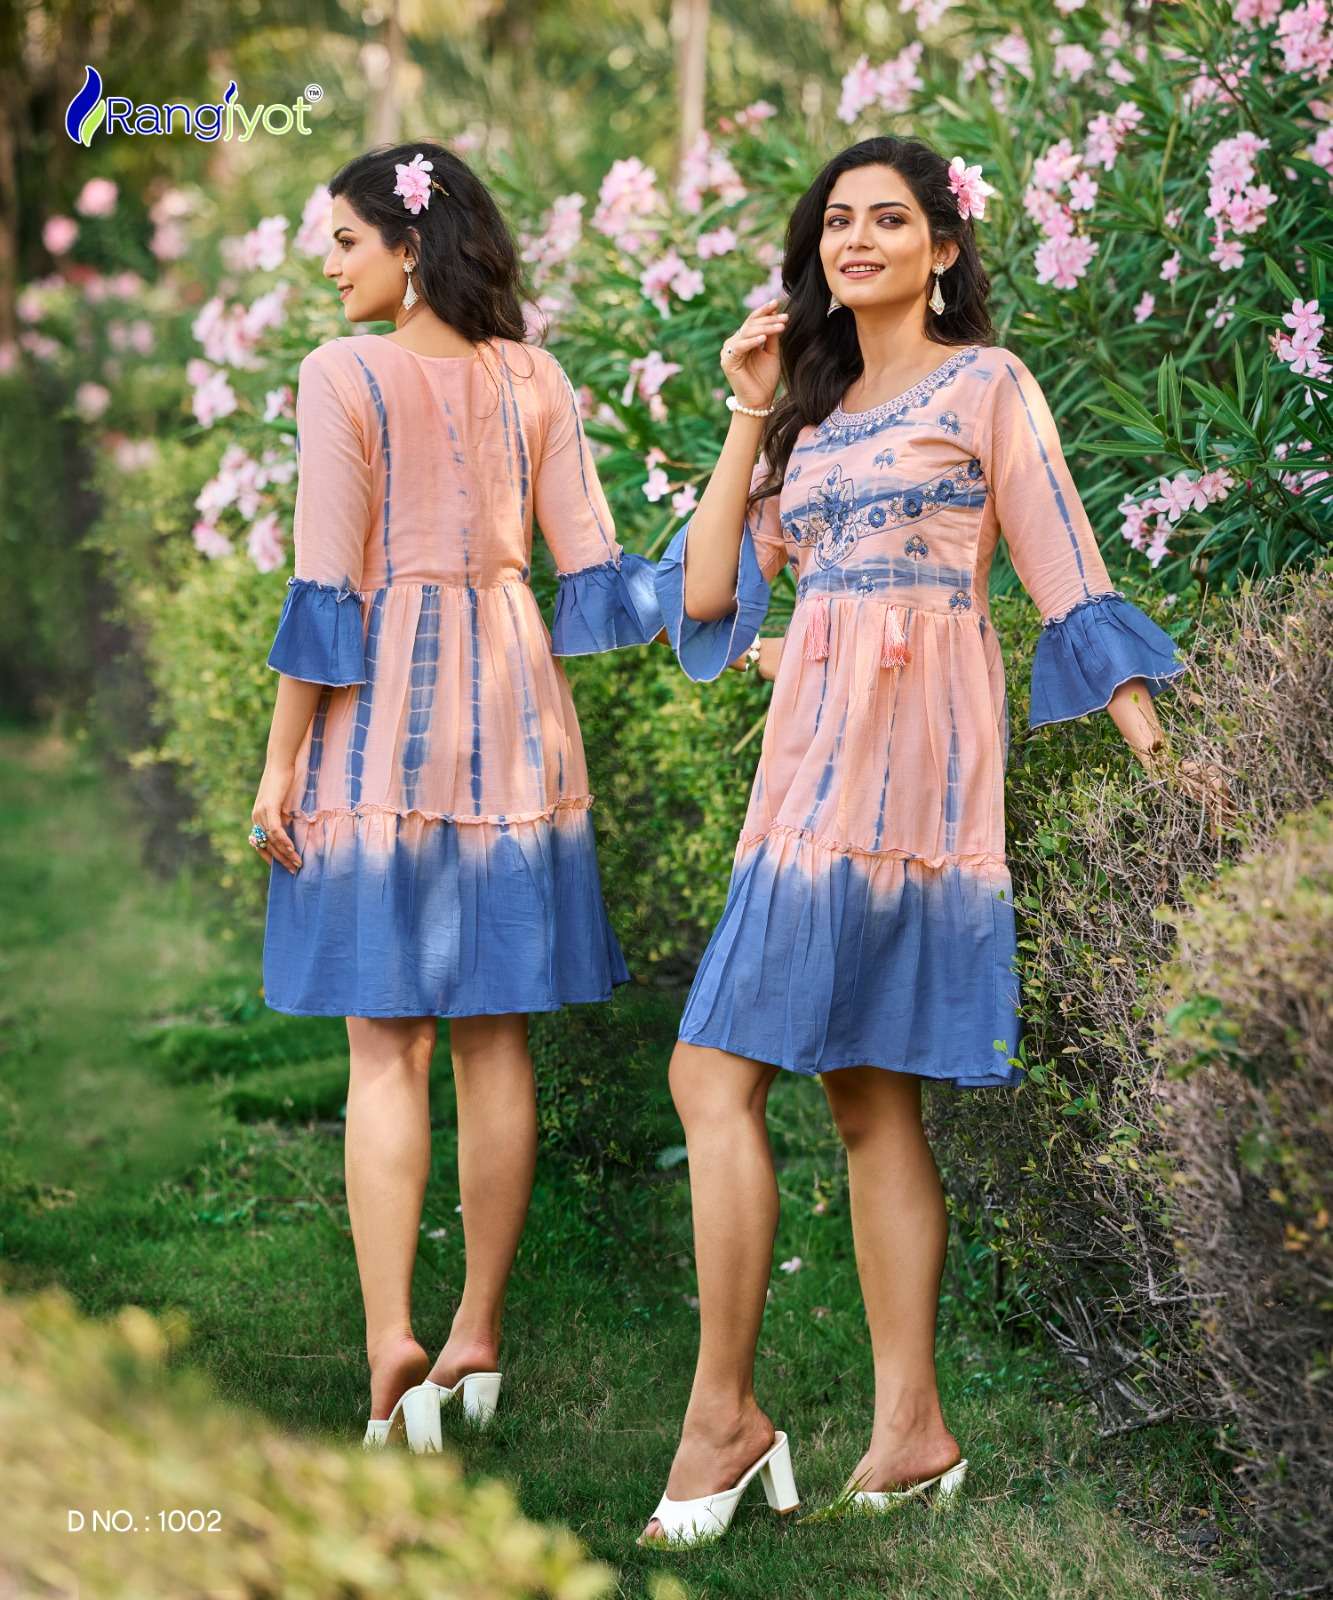 rangjyot rich girl 1001-1007 series fancy look designer tunic catalogue online dealer surat